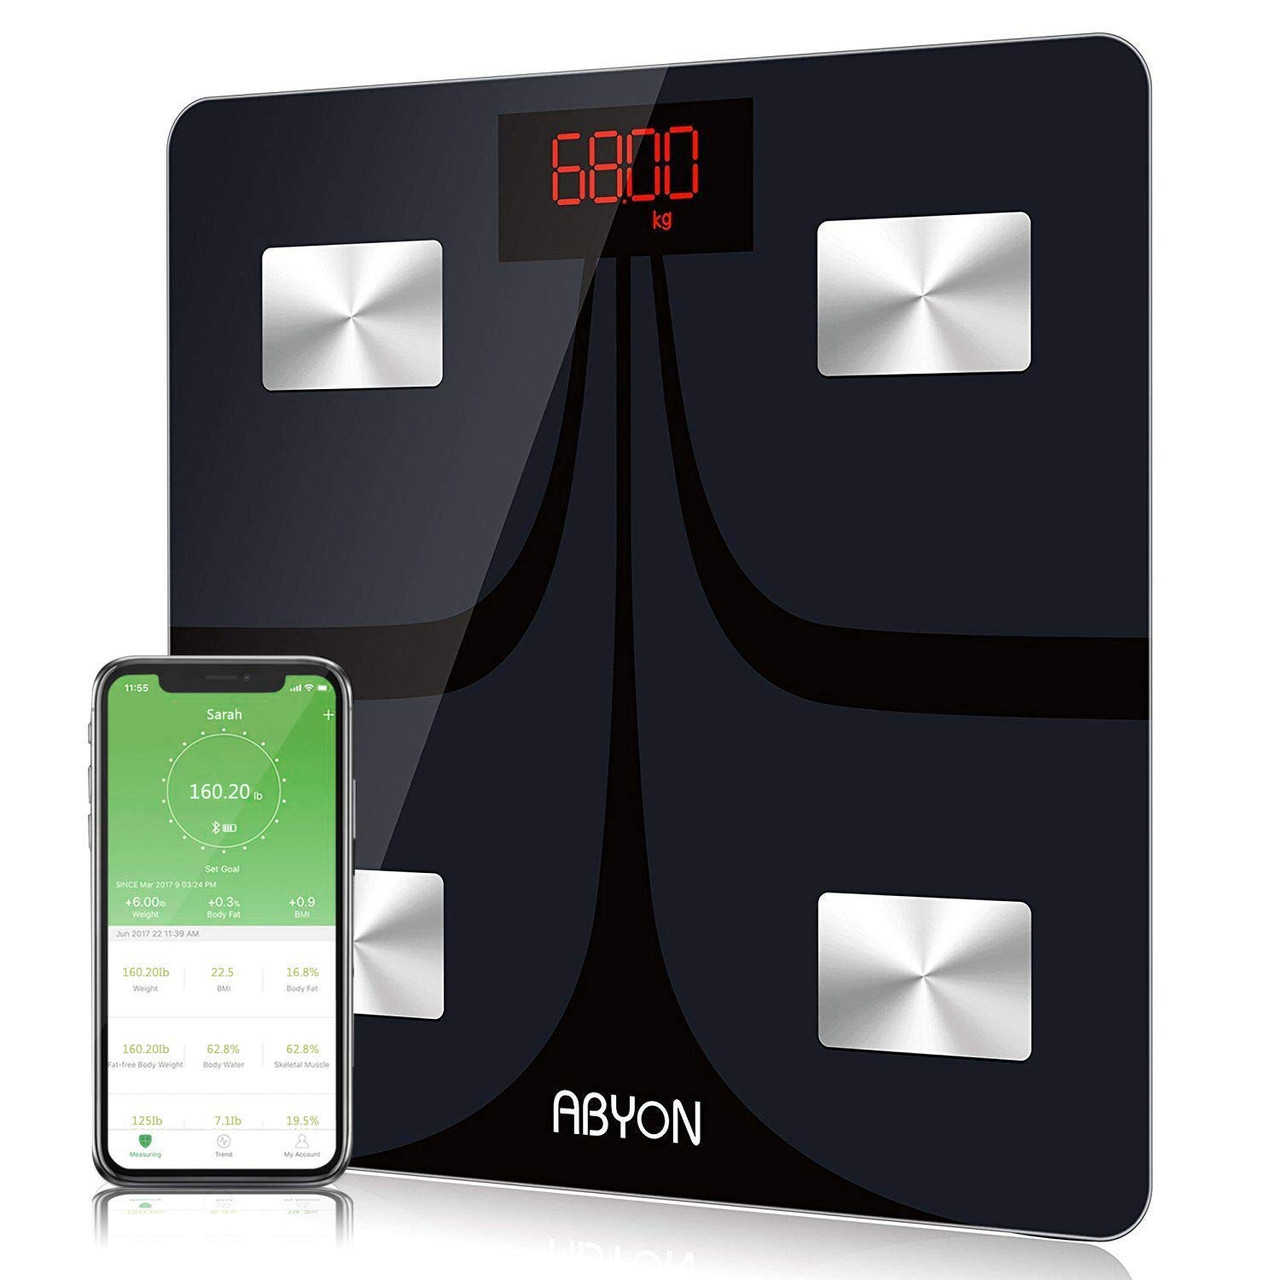 Best Smart Body Weight Scale, Digital BMI & Body Fat Scale